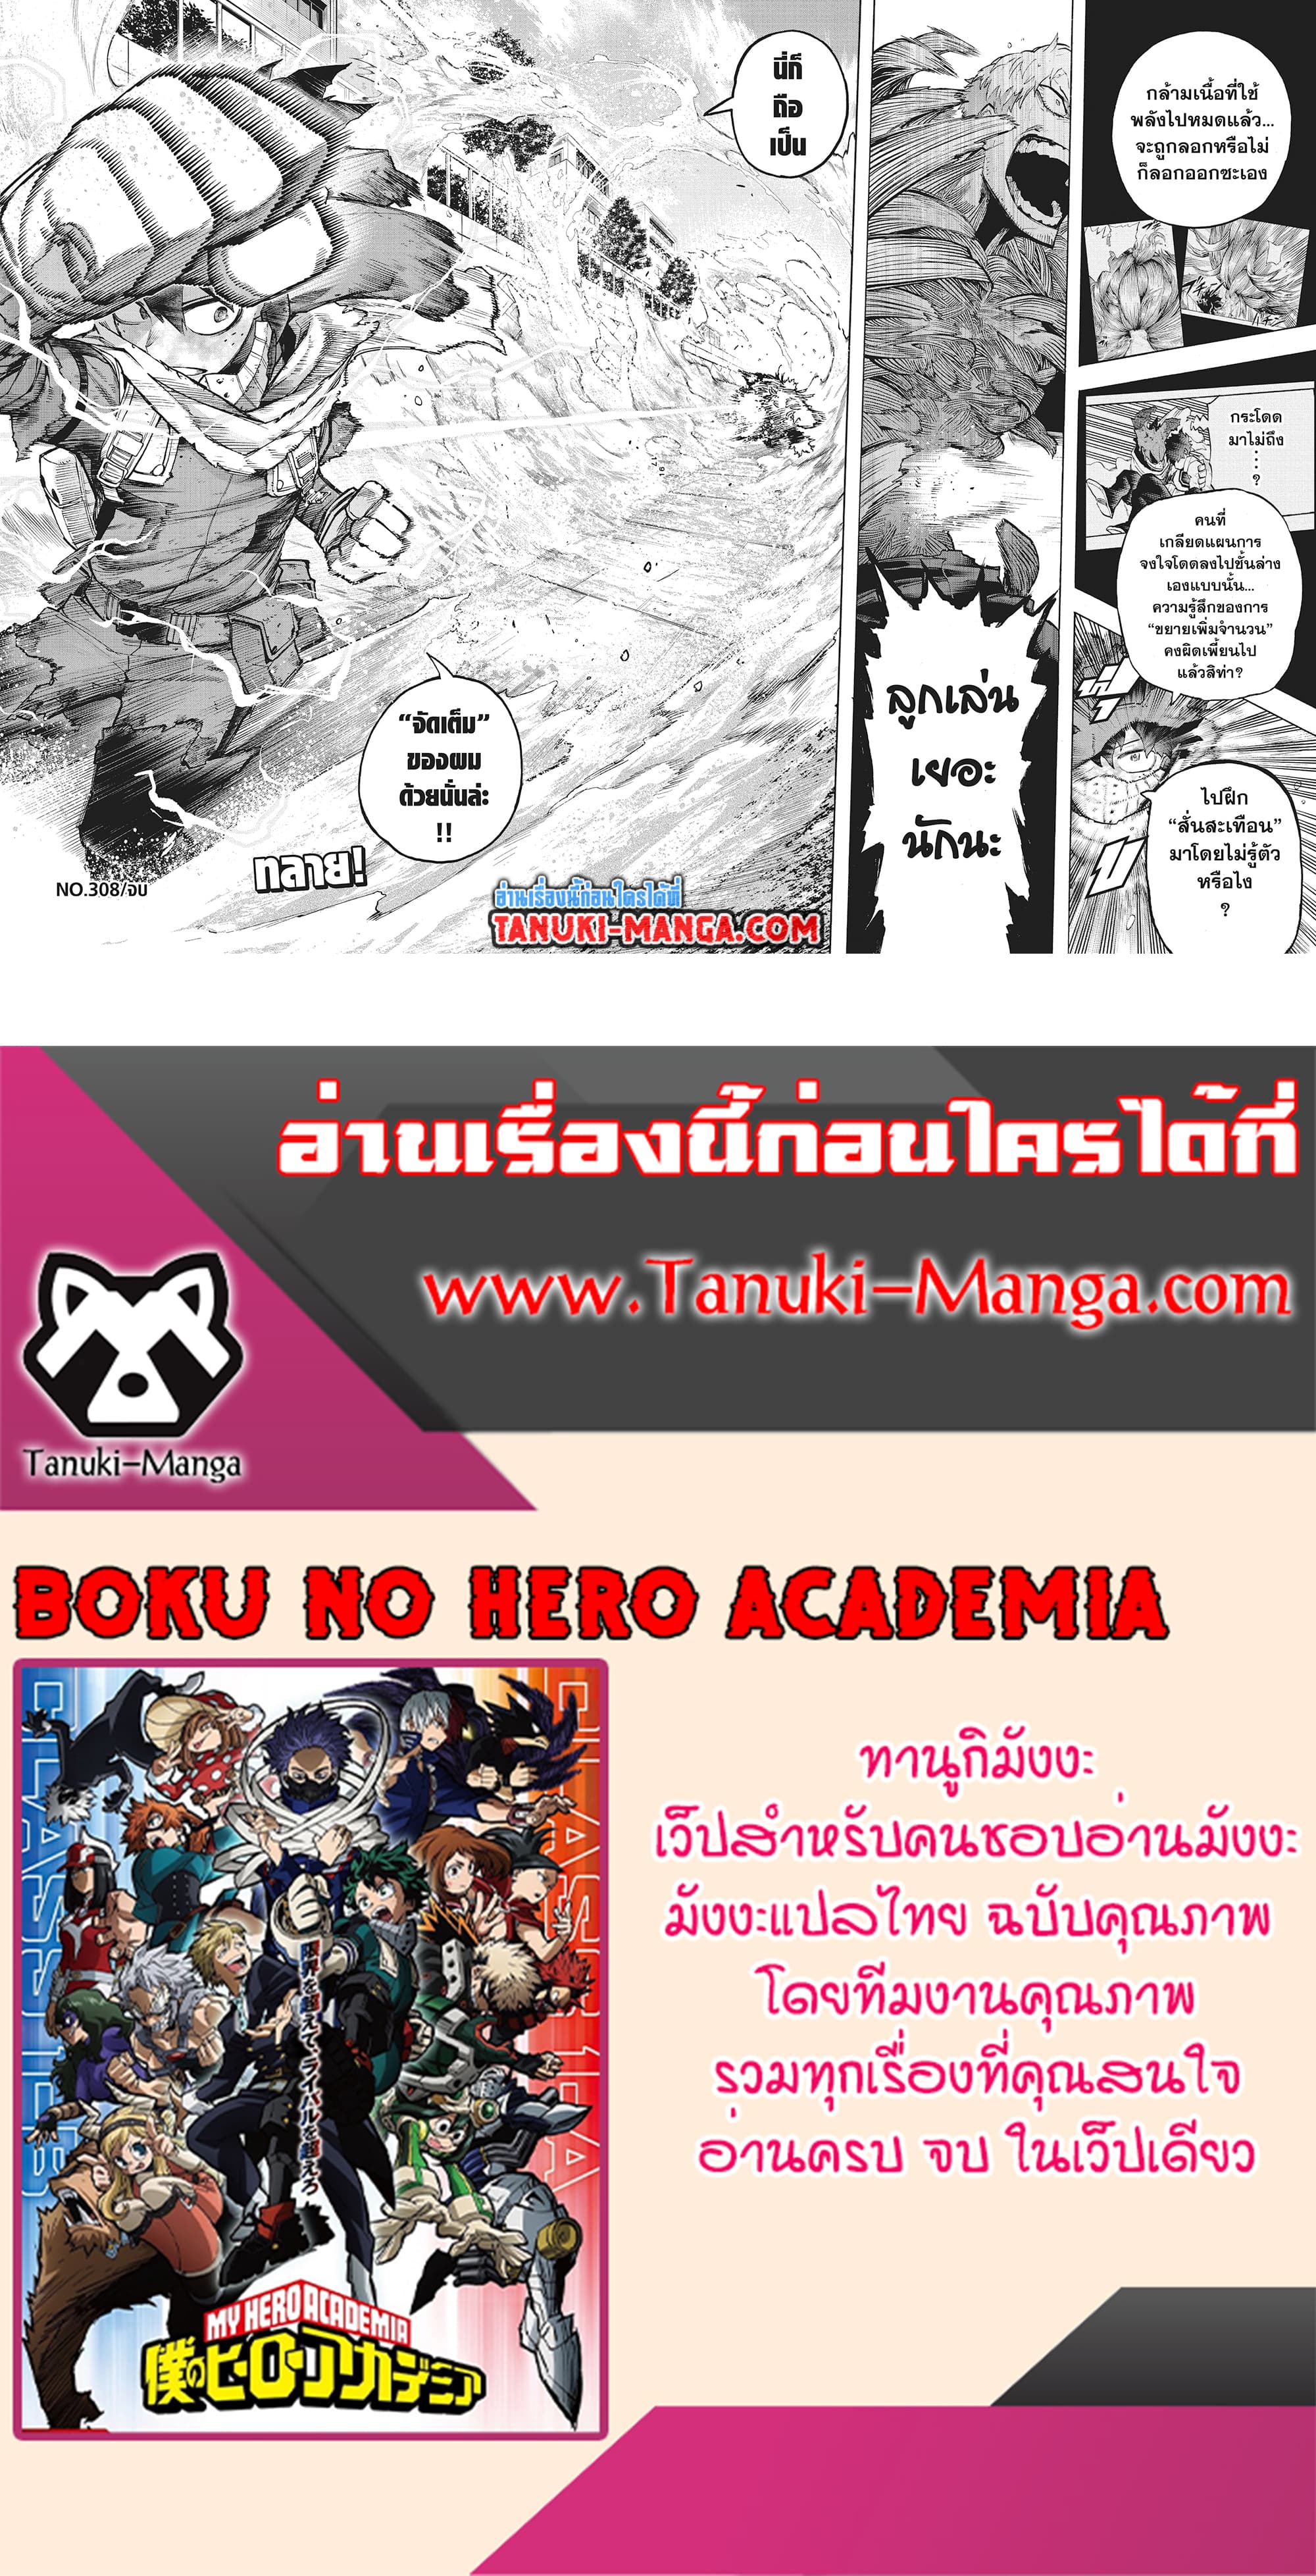 Boku no Hero Academia ร ยธโ€ขร ยธยญร ยธโขร ยธโ€”ร ยธยตร ยนห 308 (15)